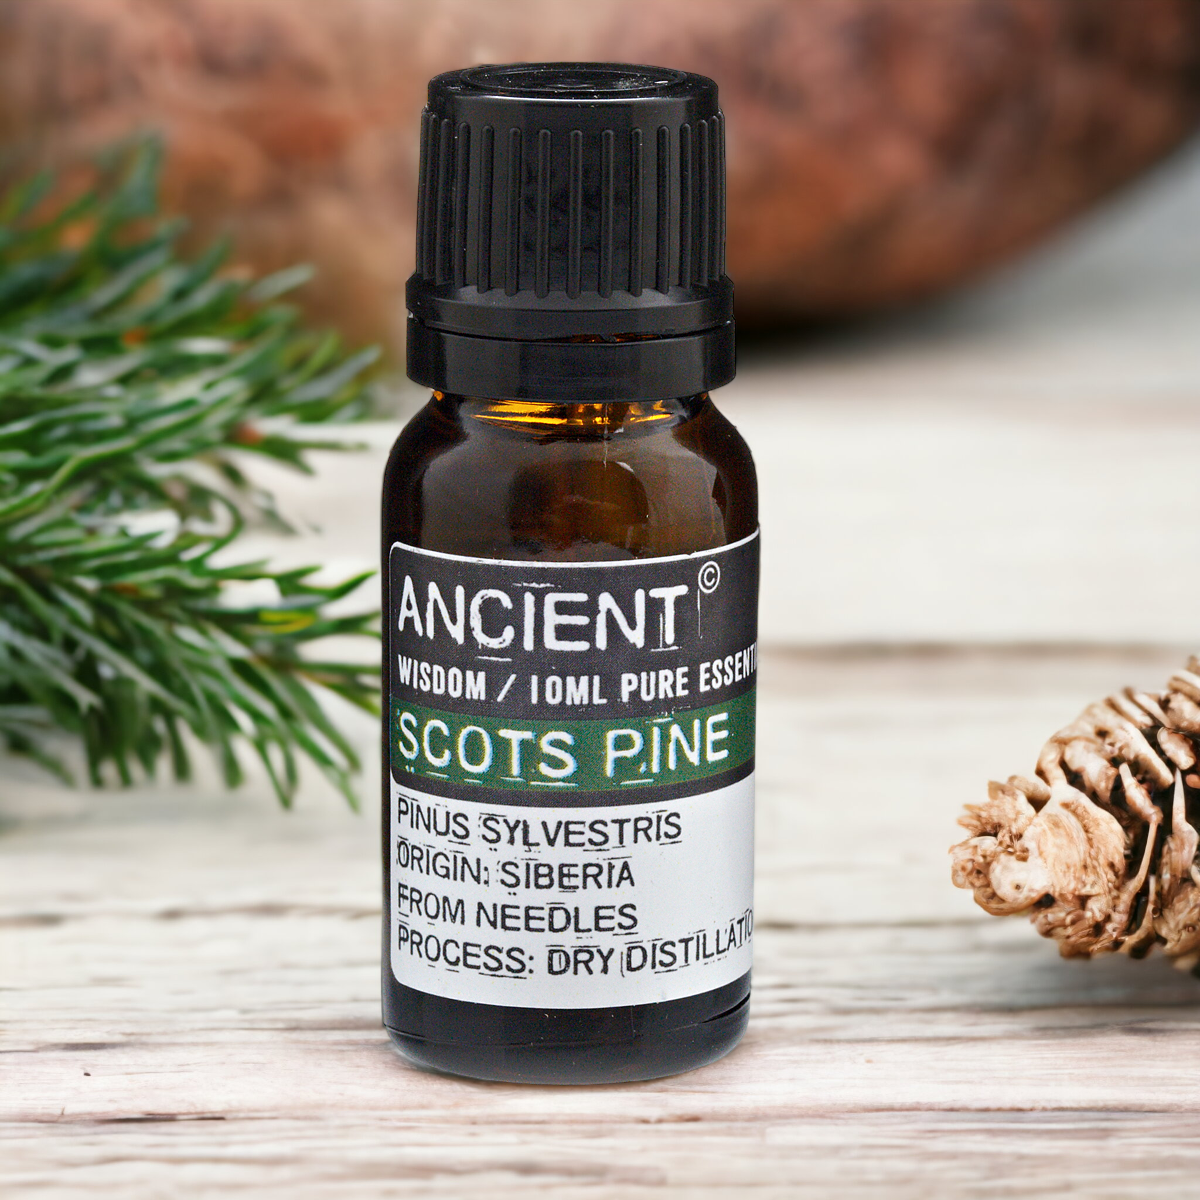 Pine Sylvestris (Scots Pine) Essential Oil - 10ml